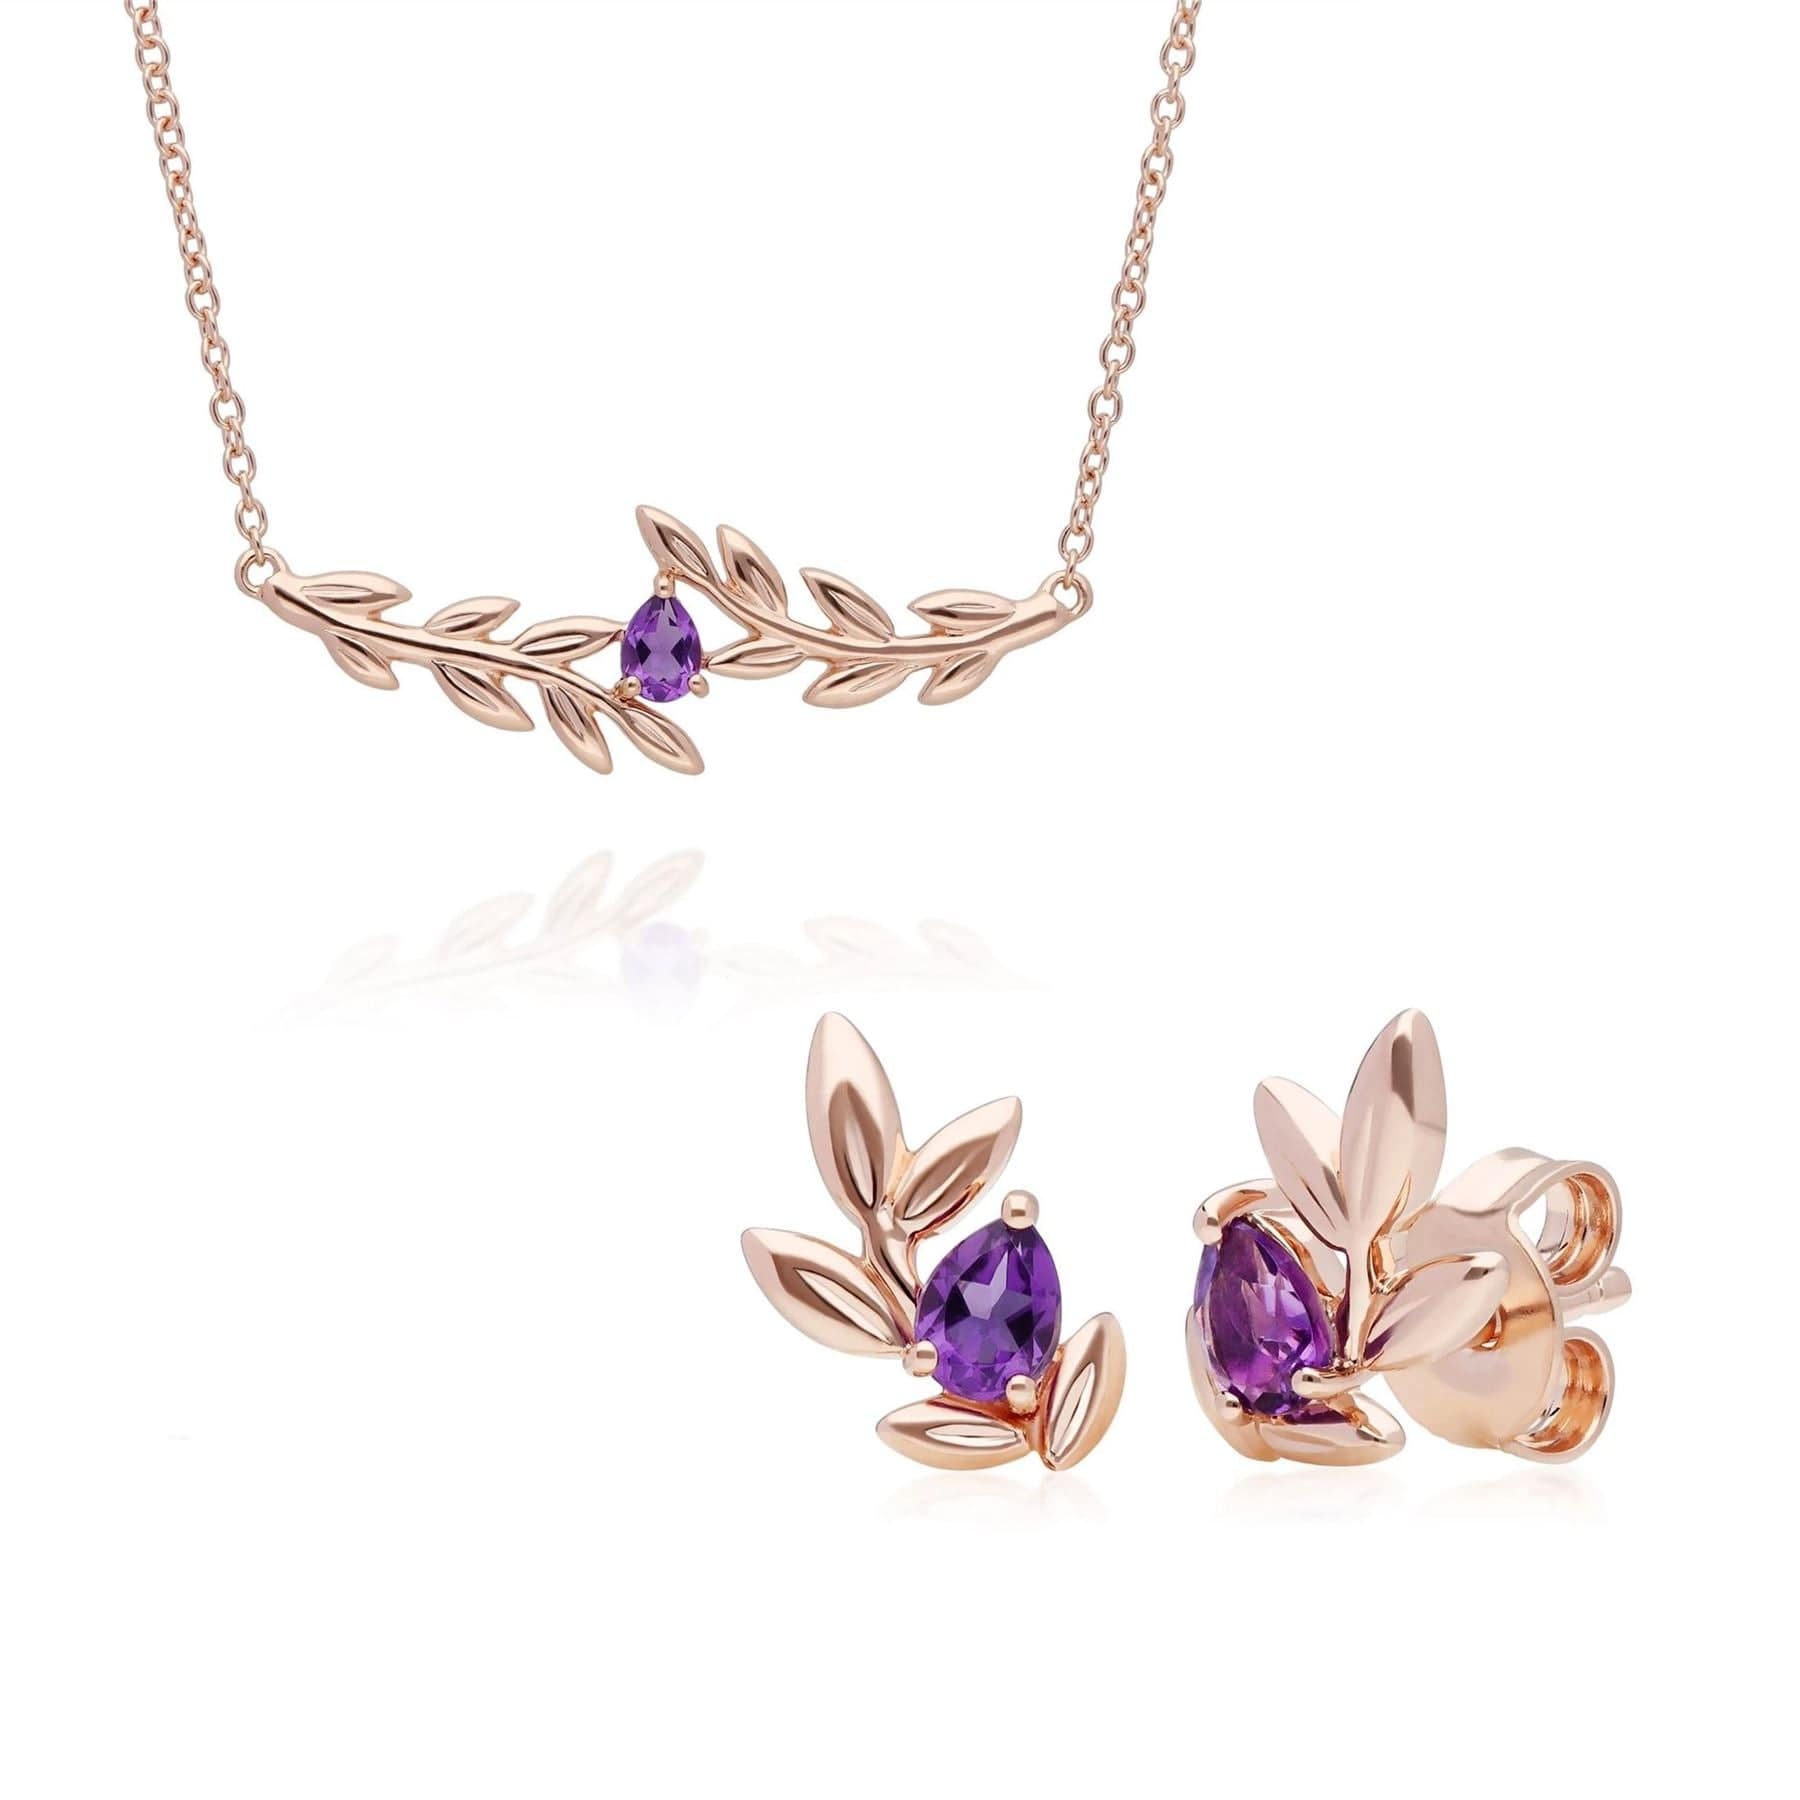 135N0364019-135E1642019 O Leaf Amethyst Necklace & Stud Earring Set in 9ct Rose Gold 1